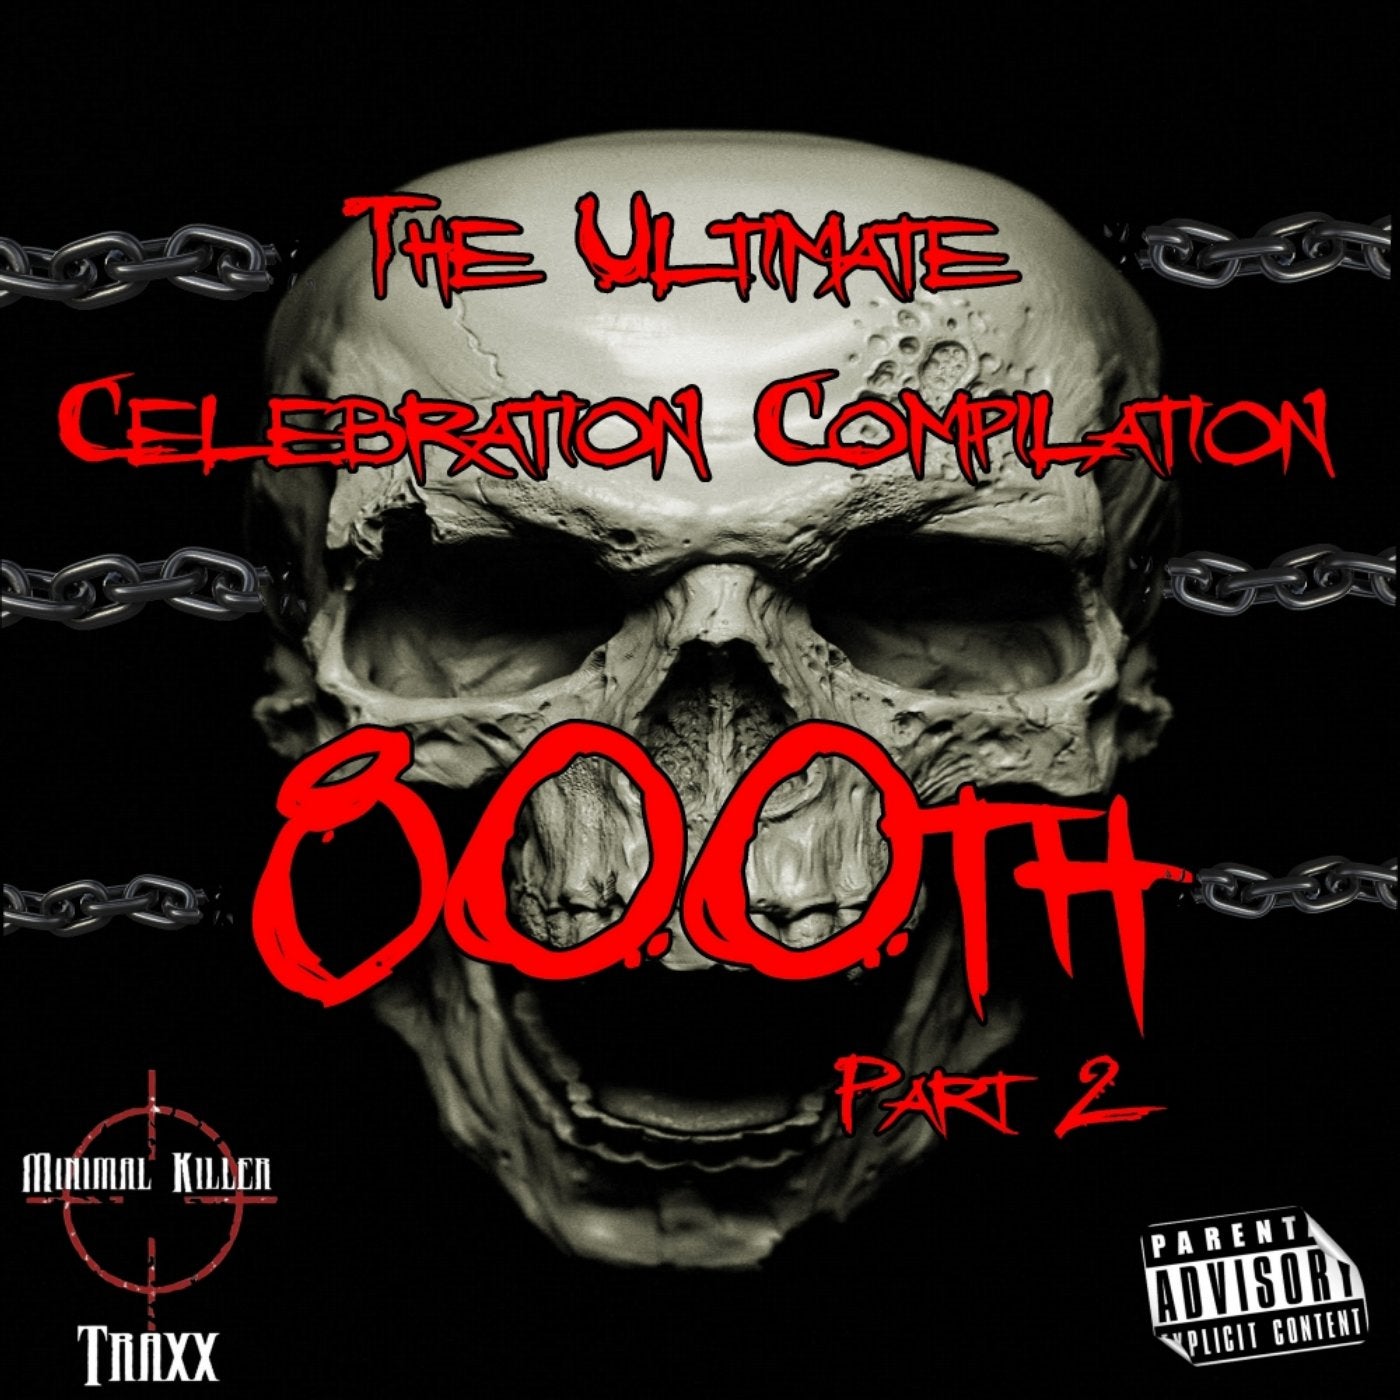 The Ultimate Celebration Compilation 800th, Pt. 2